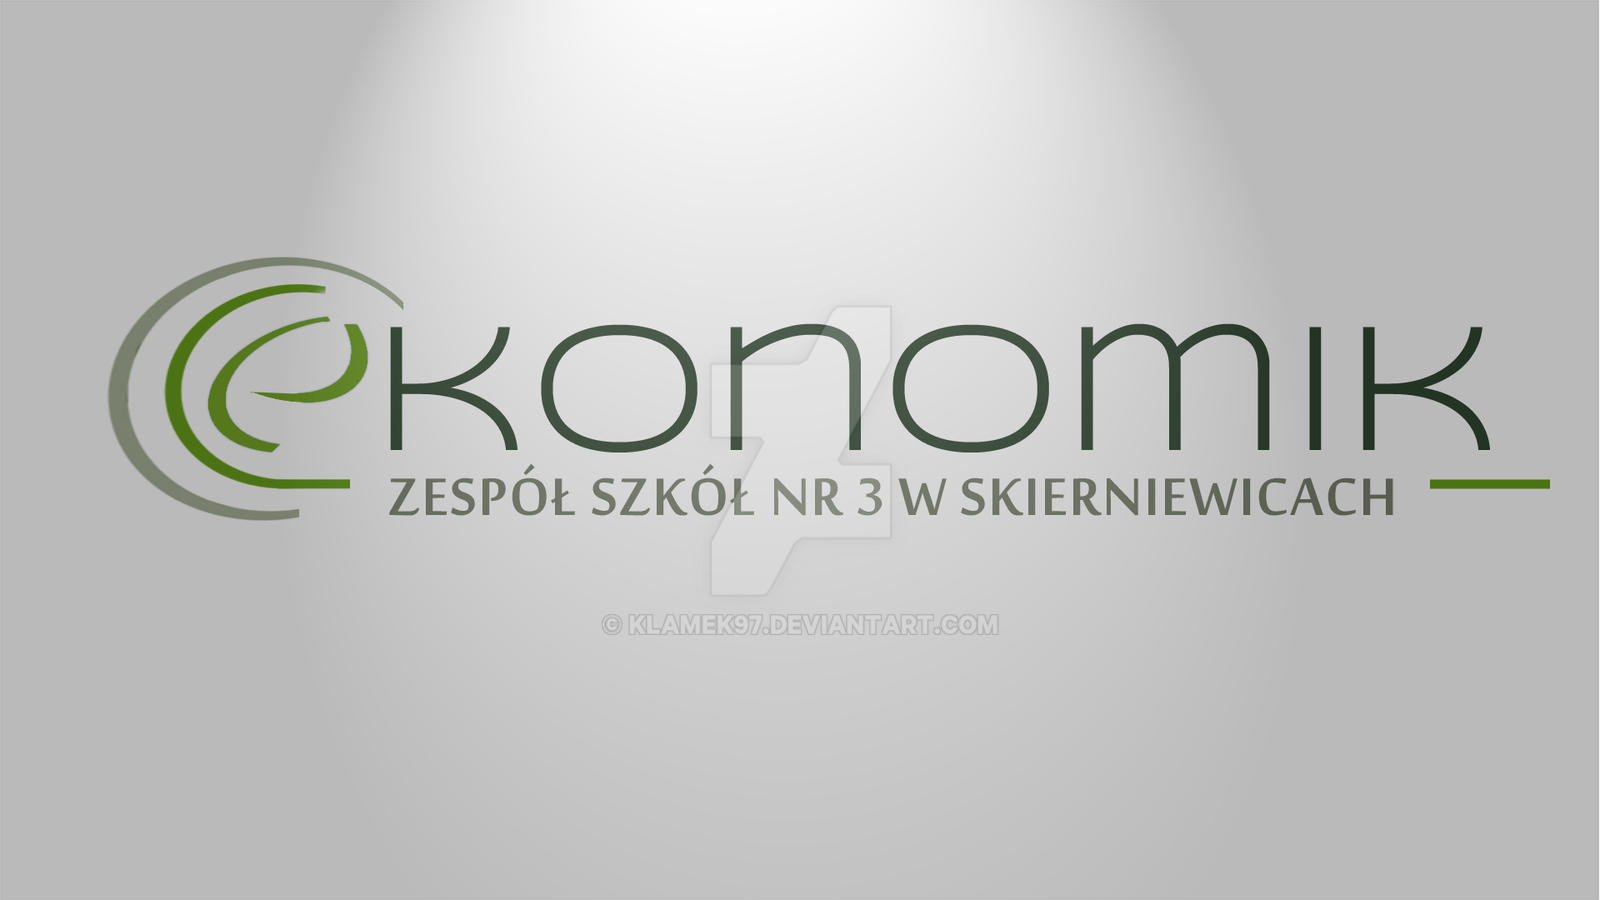 ekonomik-logo-zs3-project-2-by-klamek97-on-deviantart